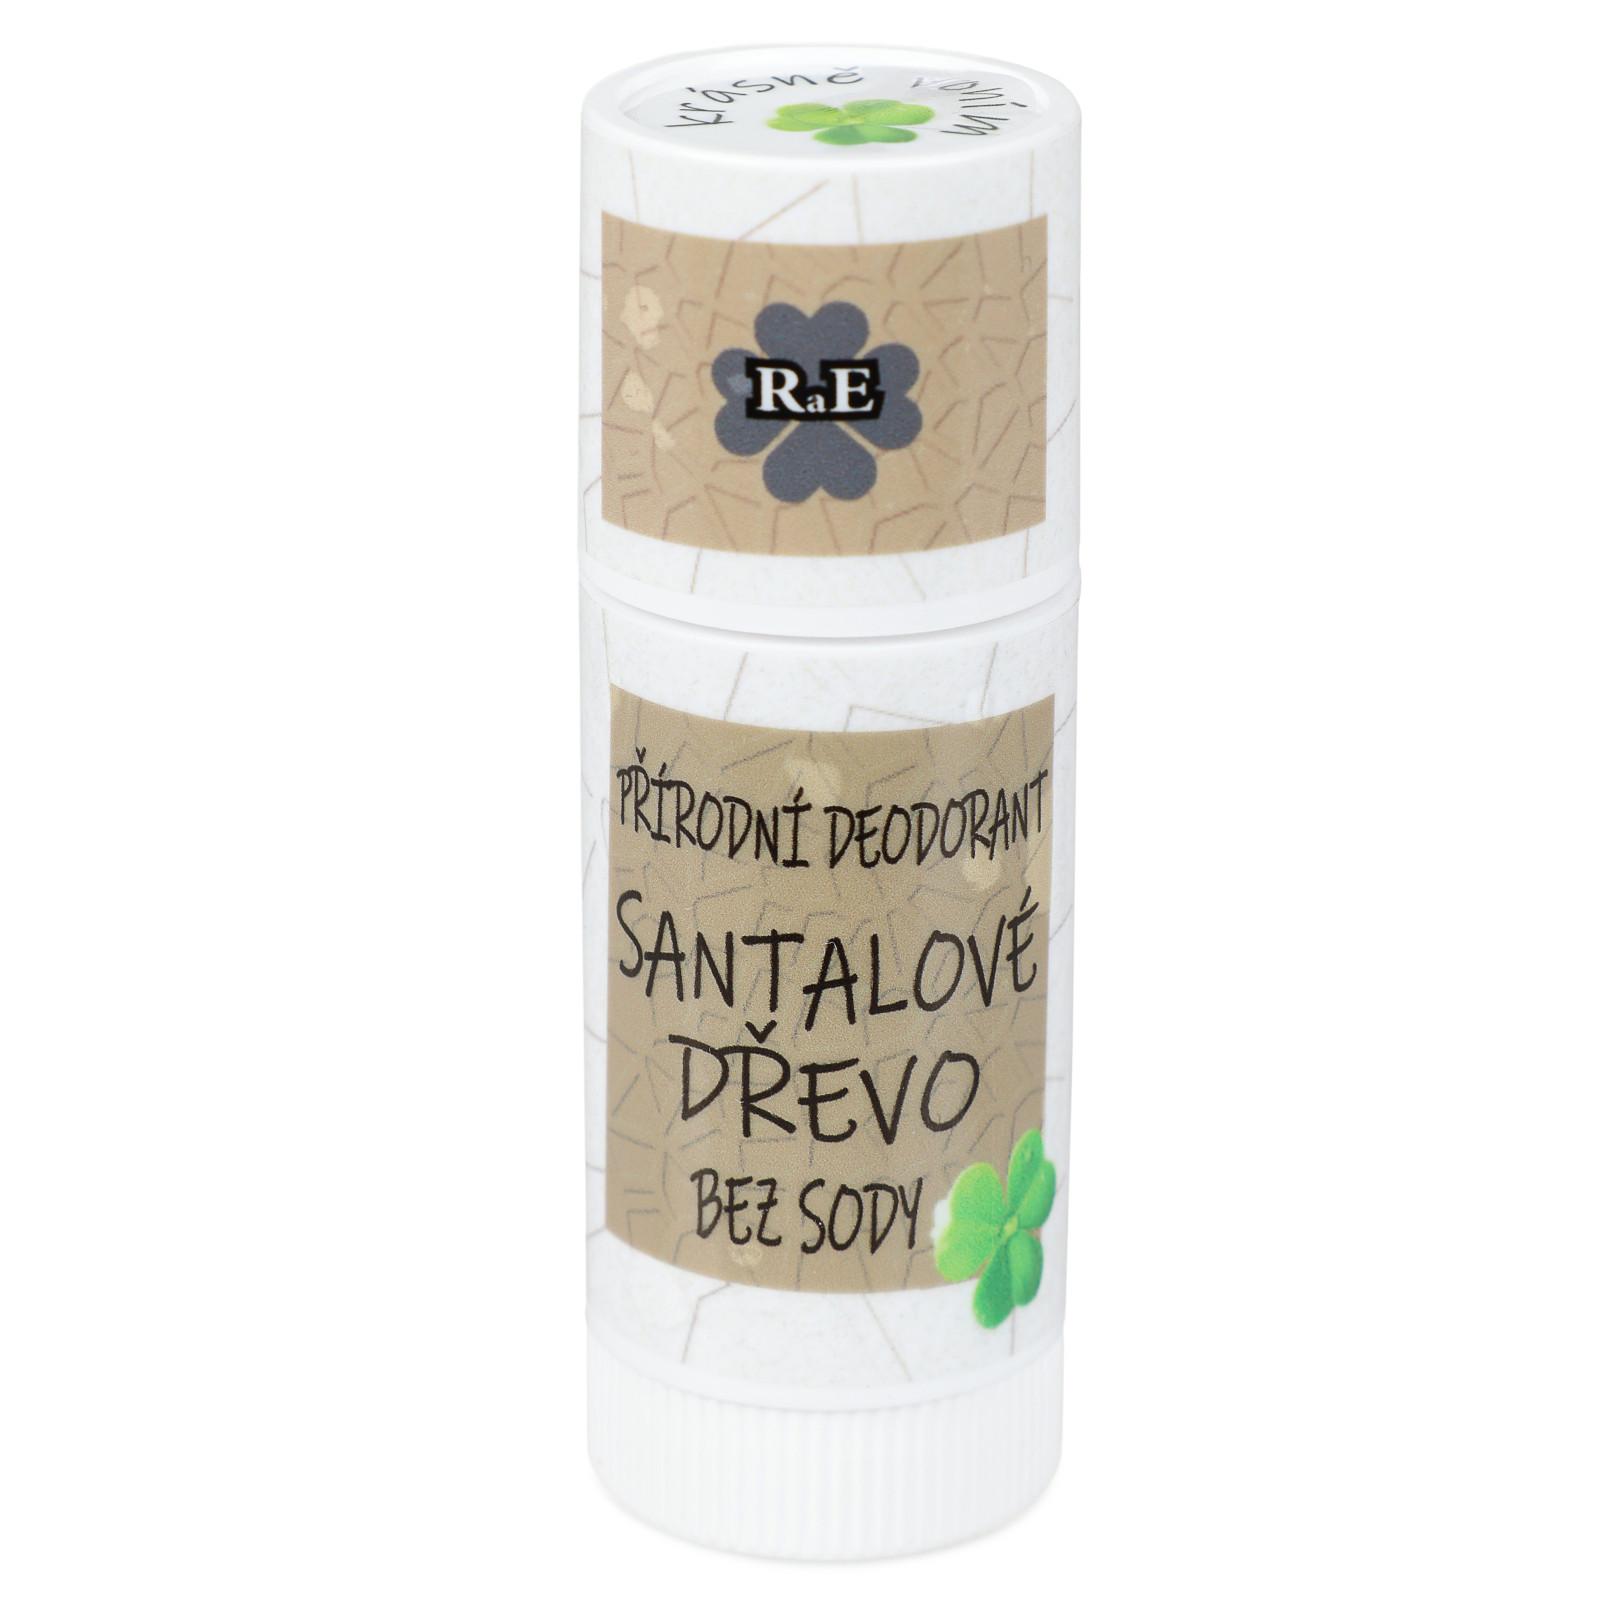 RaE Přírodní bezsodý deodorant Santalové dřevo 25 ml